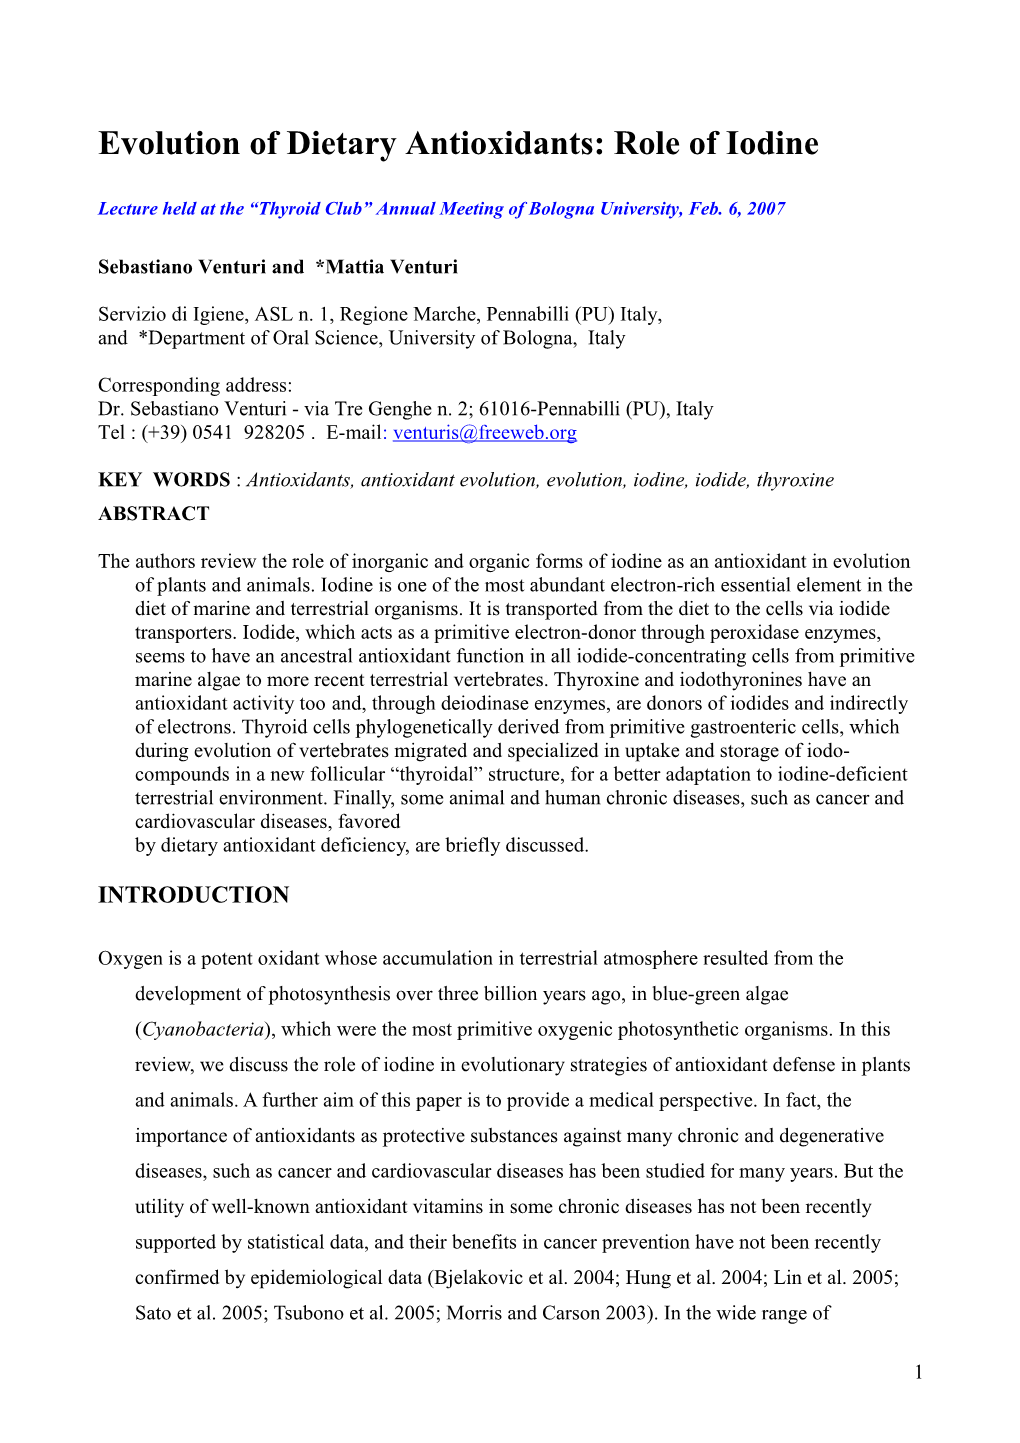 Venturi, 2007. Evolution of Dietary Antioxidants: Role of Iodine